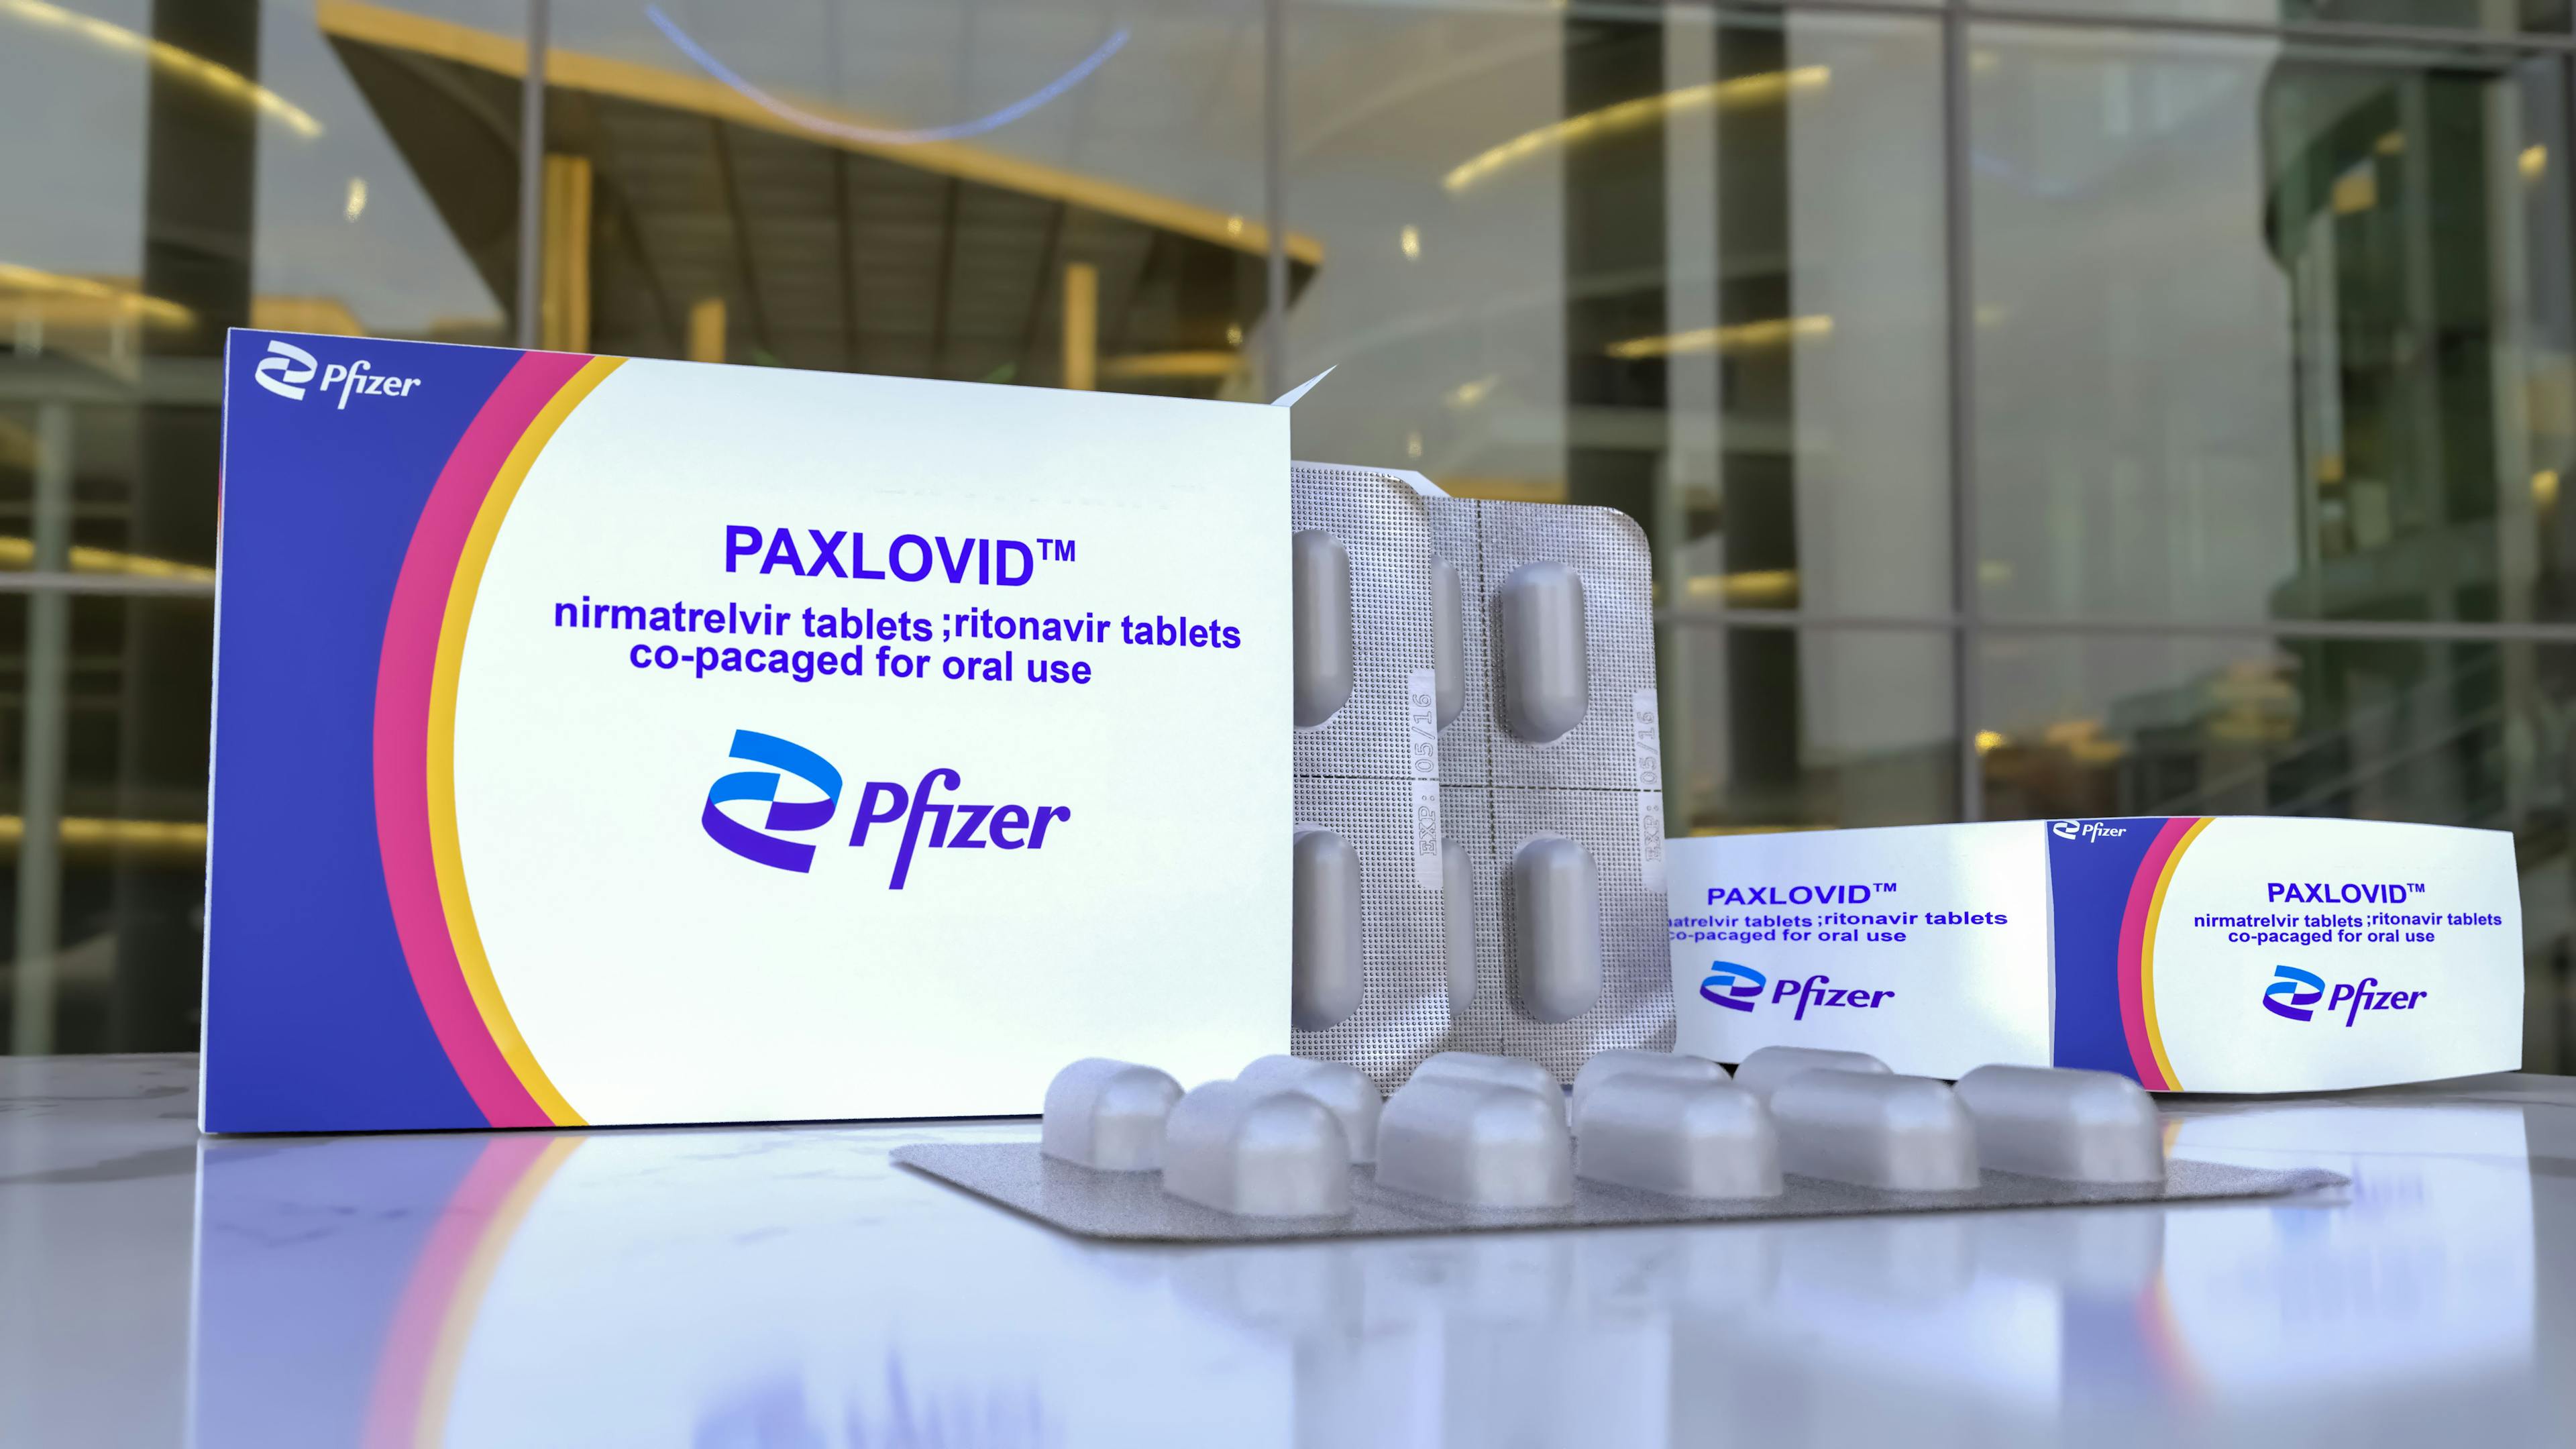 Paxlovid Has Hospitalization, Mortality Benefits Among the Vaccinated